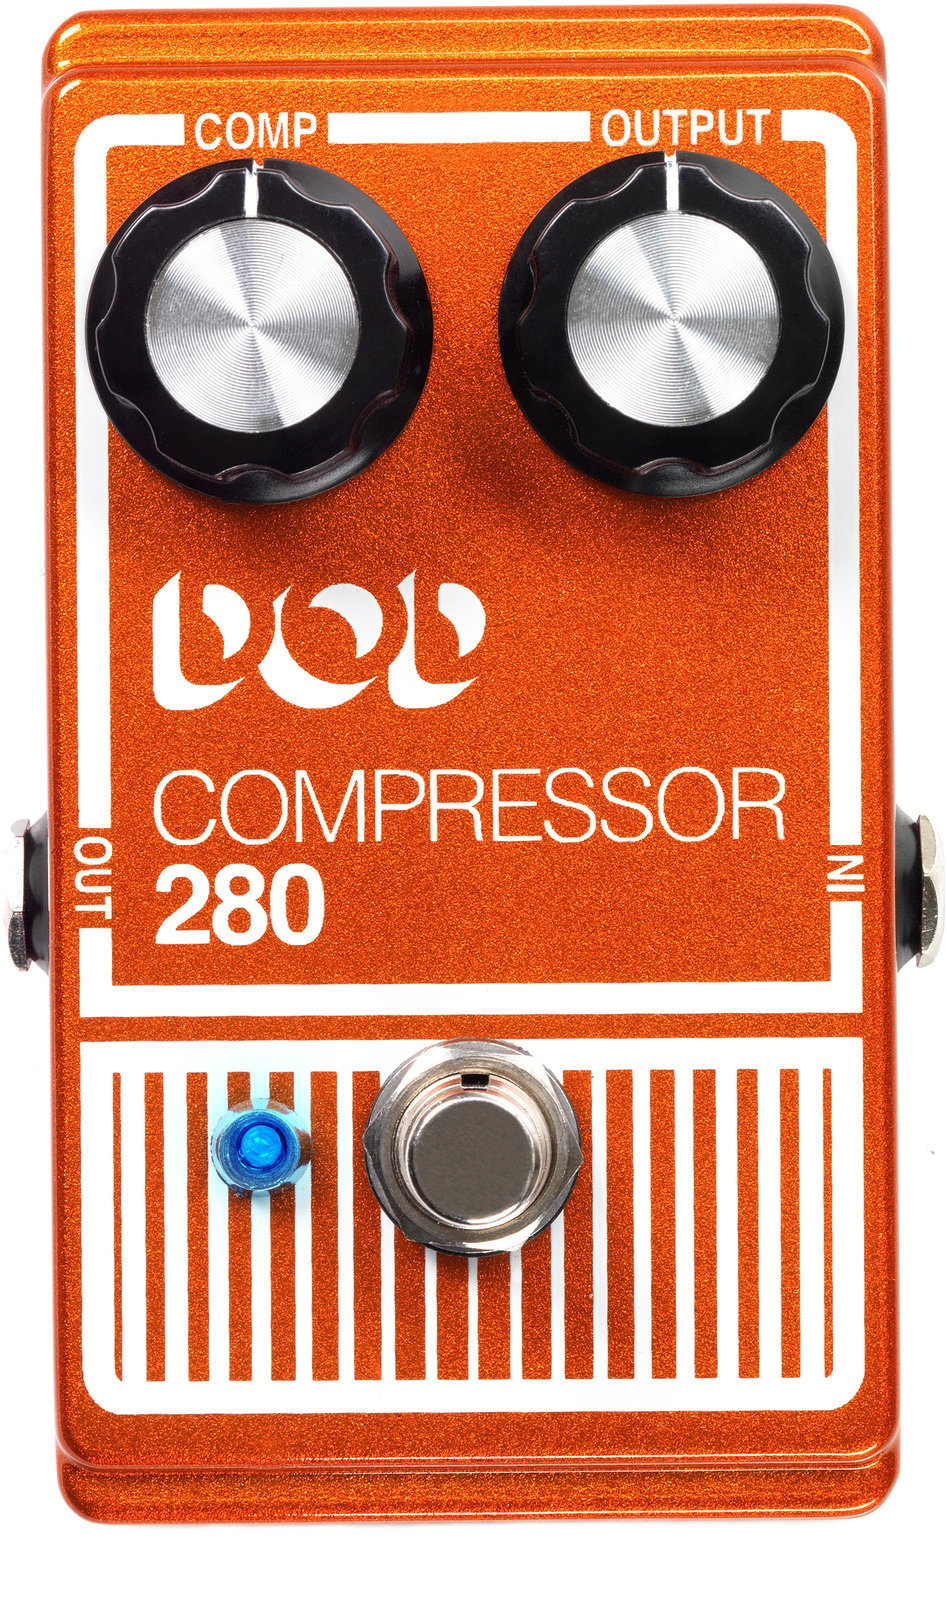 DOD Compressor 280 DOD